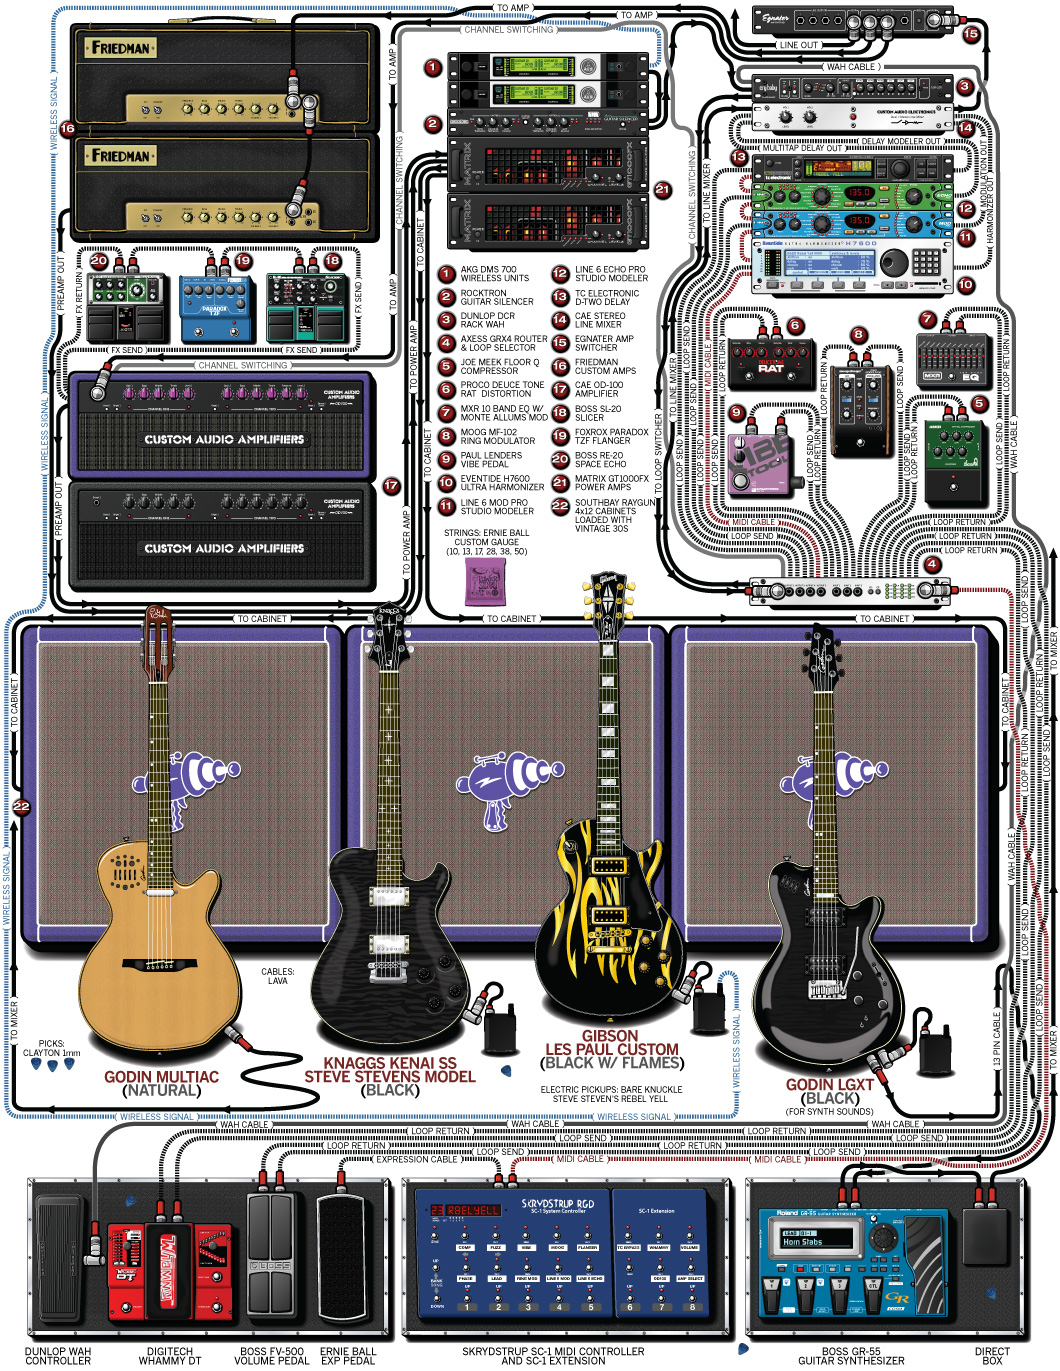 Steve Stevens Guitar Gear & Rig – Billy Idol – 2012